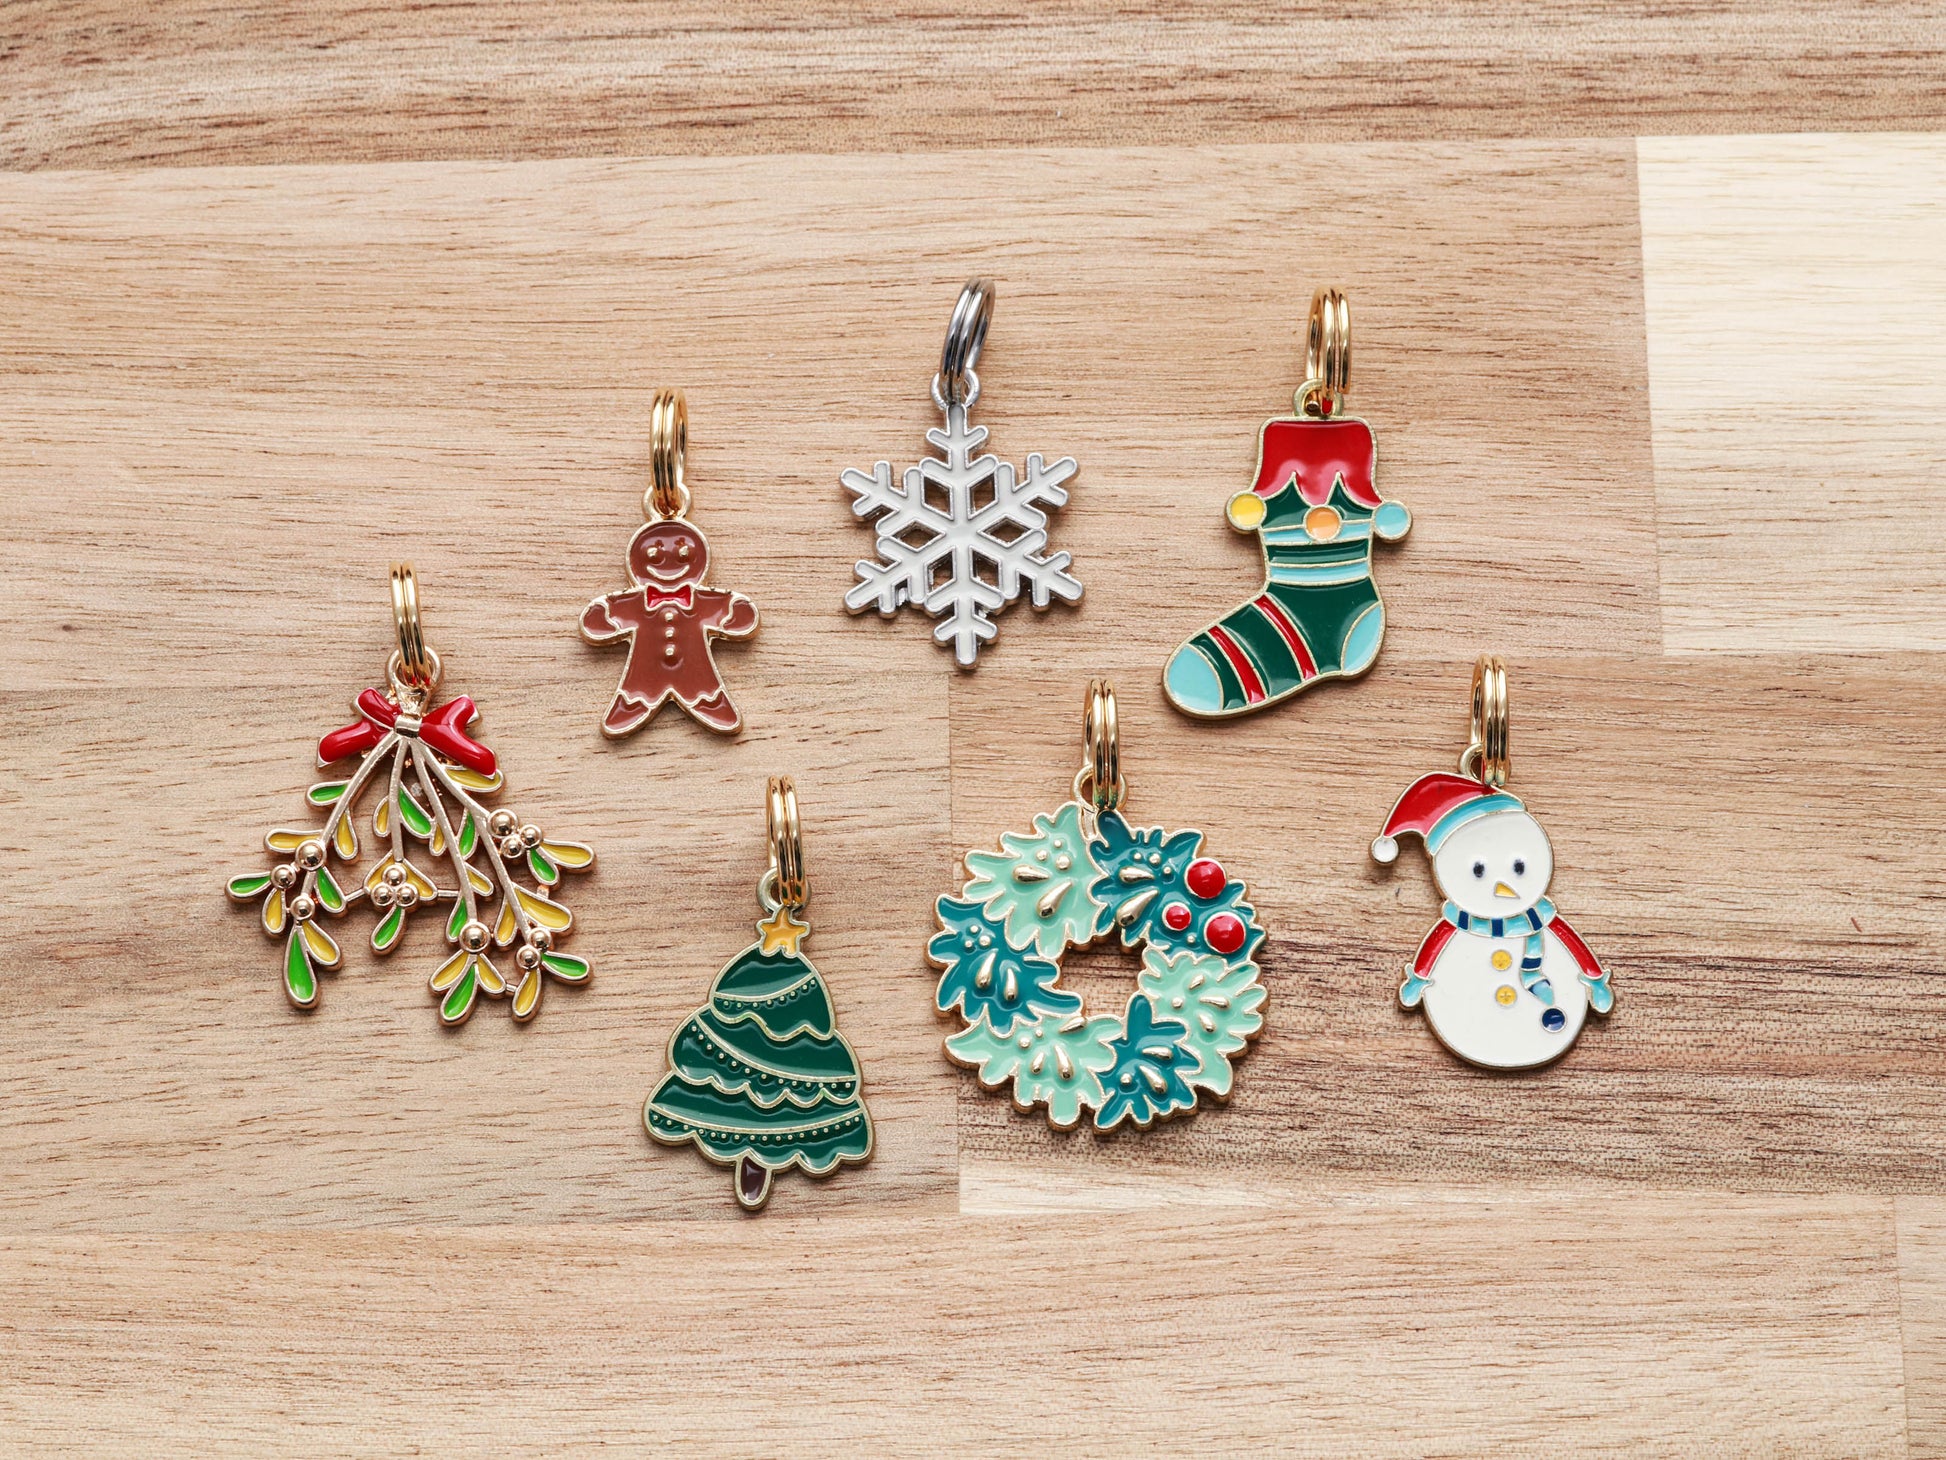 Snowflake collar charm, gingerbread collar charm, mistletoe collar charm, Christmas tree collar charm, wreath collar charm, snowman collar charm, Christmas stocking collar charm.